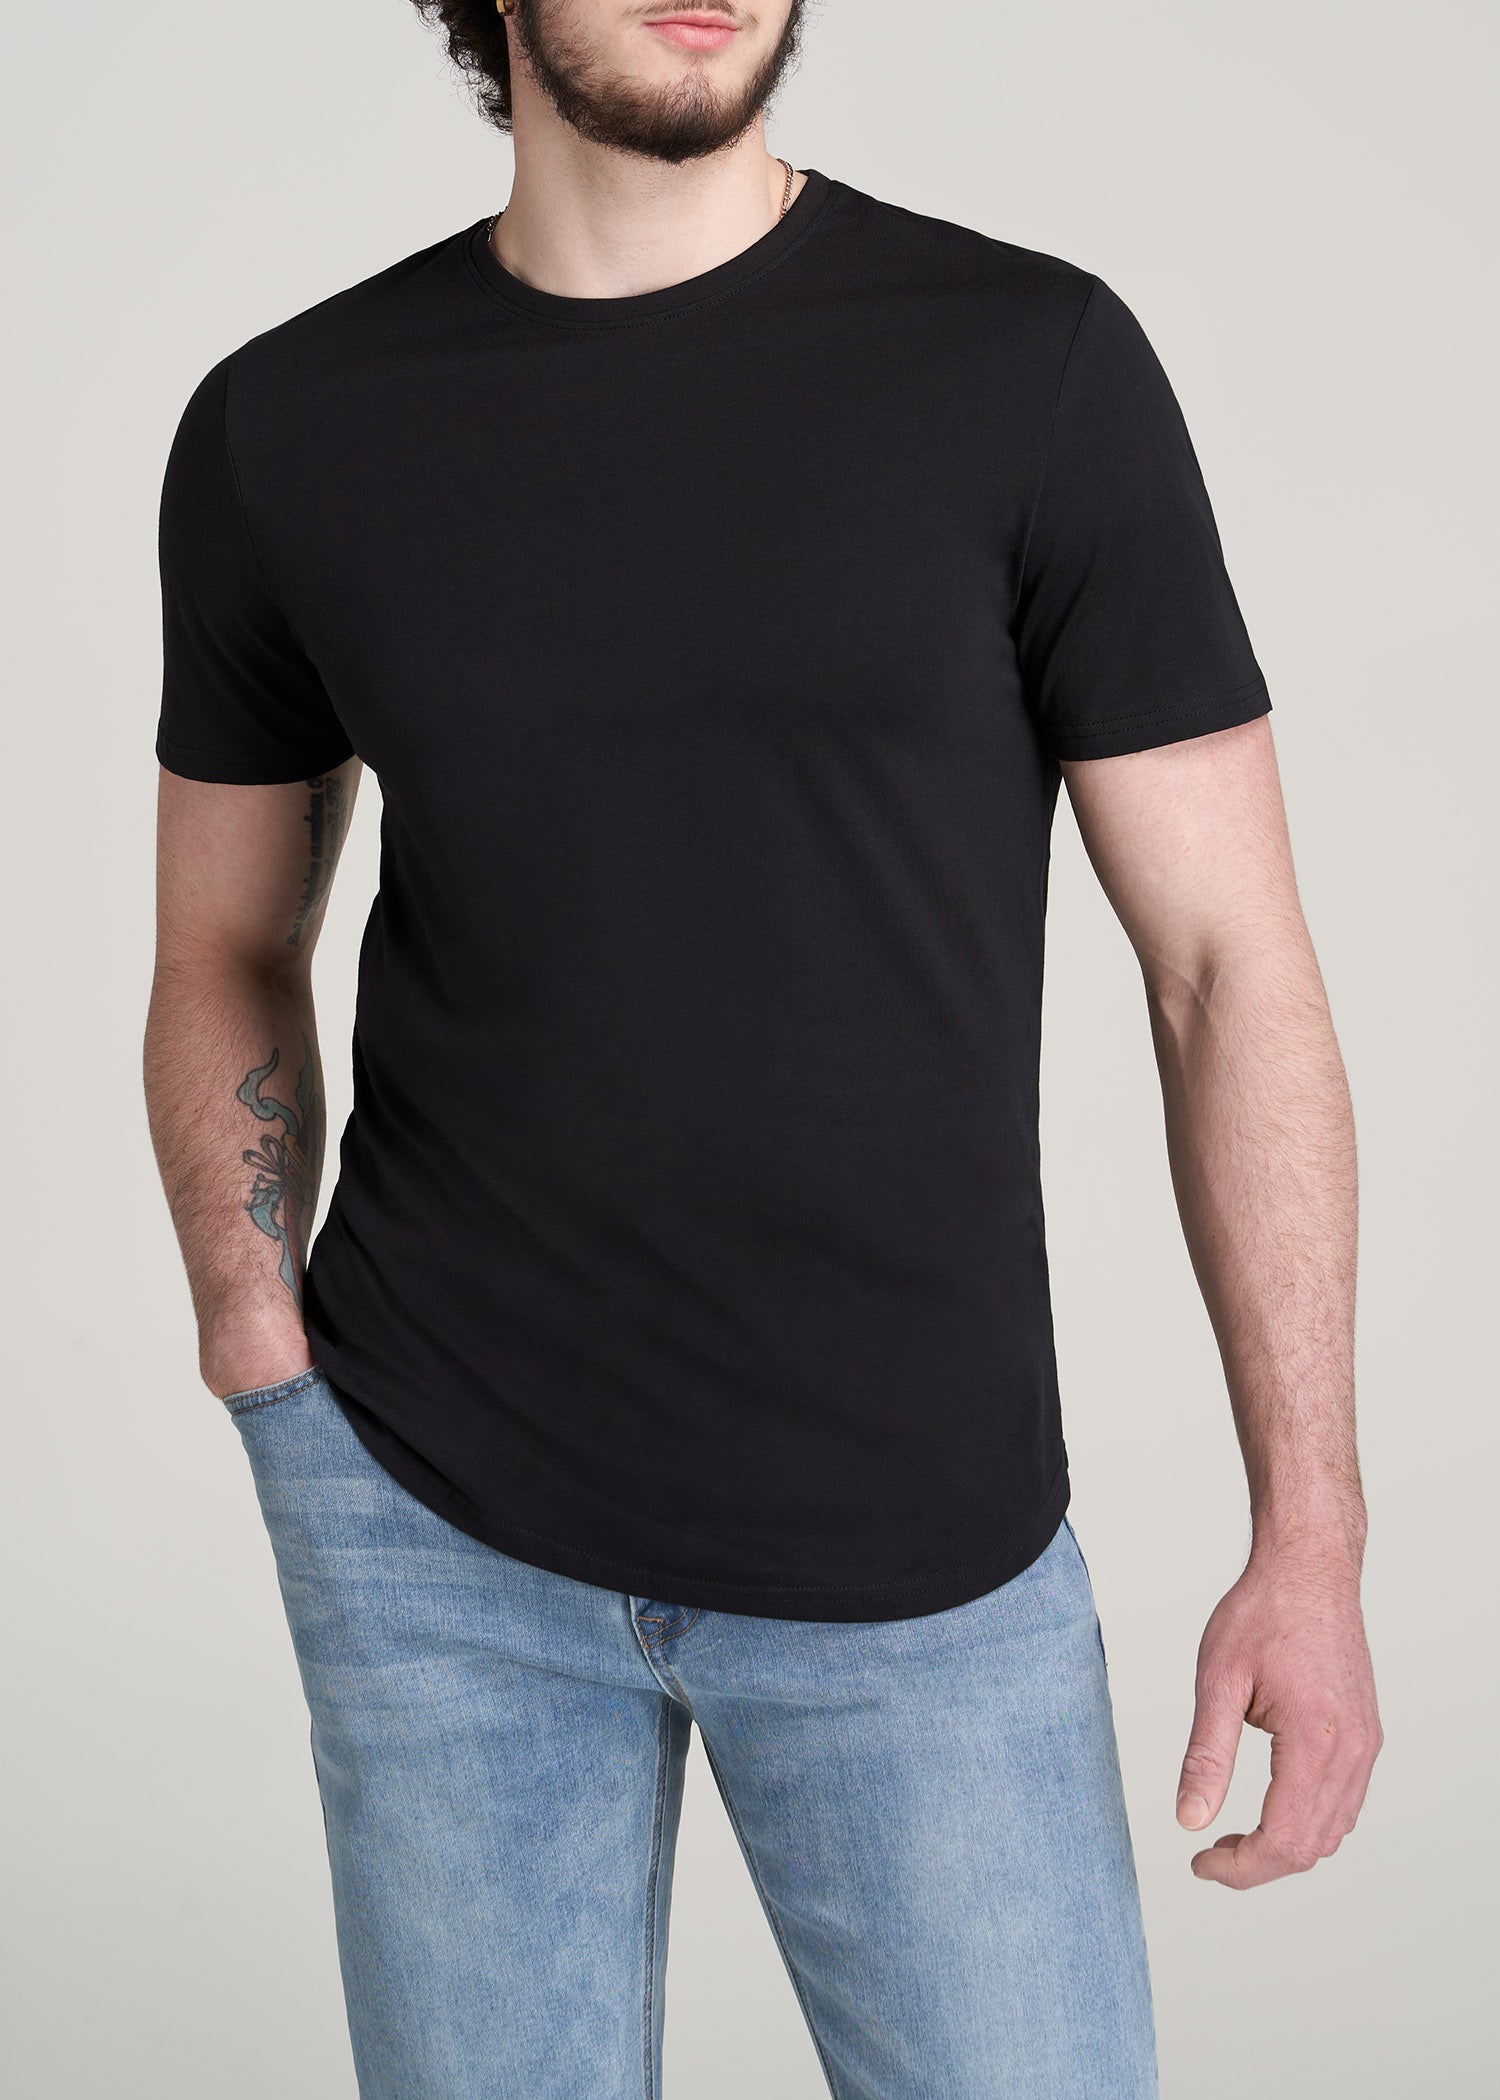 Scoop Neck T-shirts Mens: Men\'s Tall Bottom Black Tees | American Tall